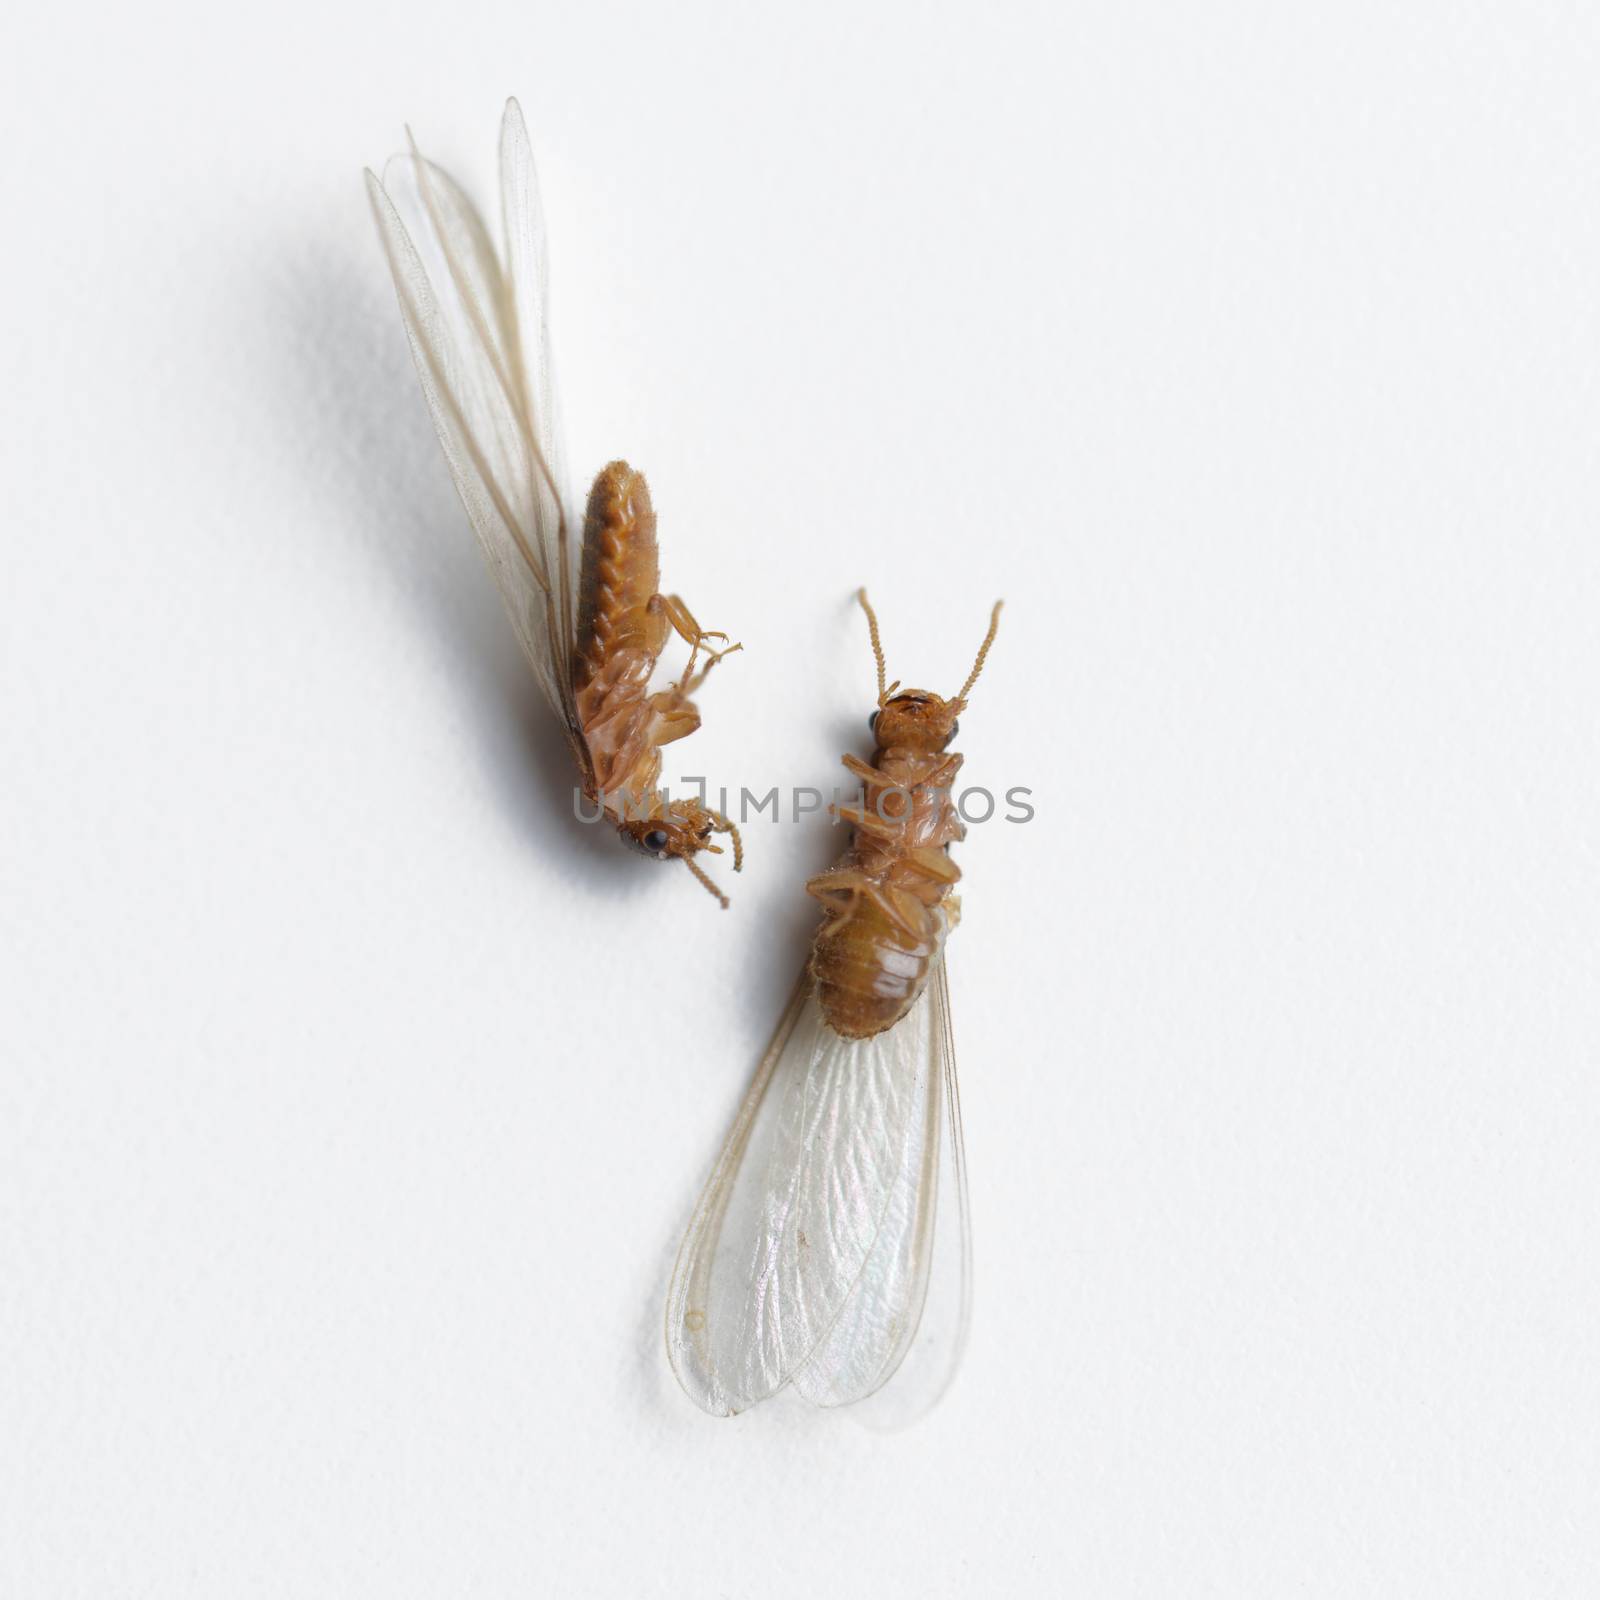 termite white ant dead by antpkr